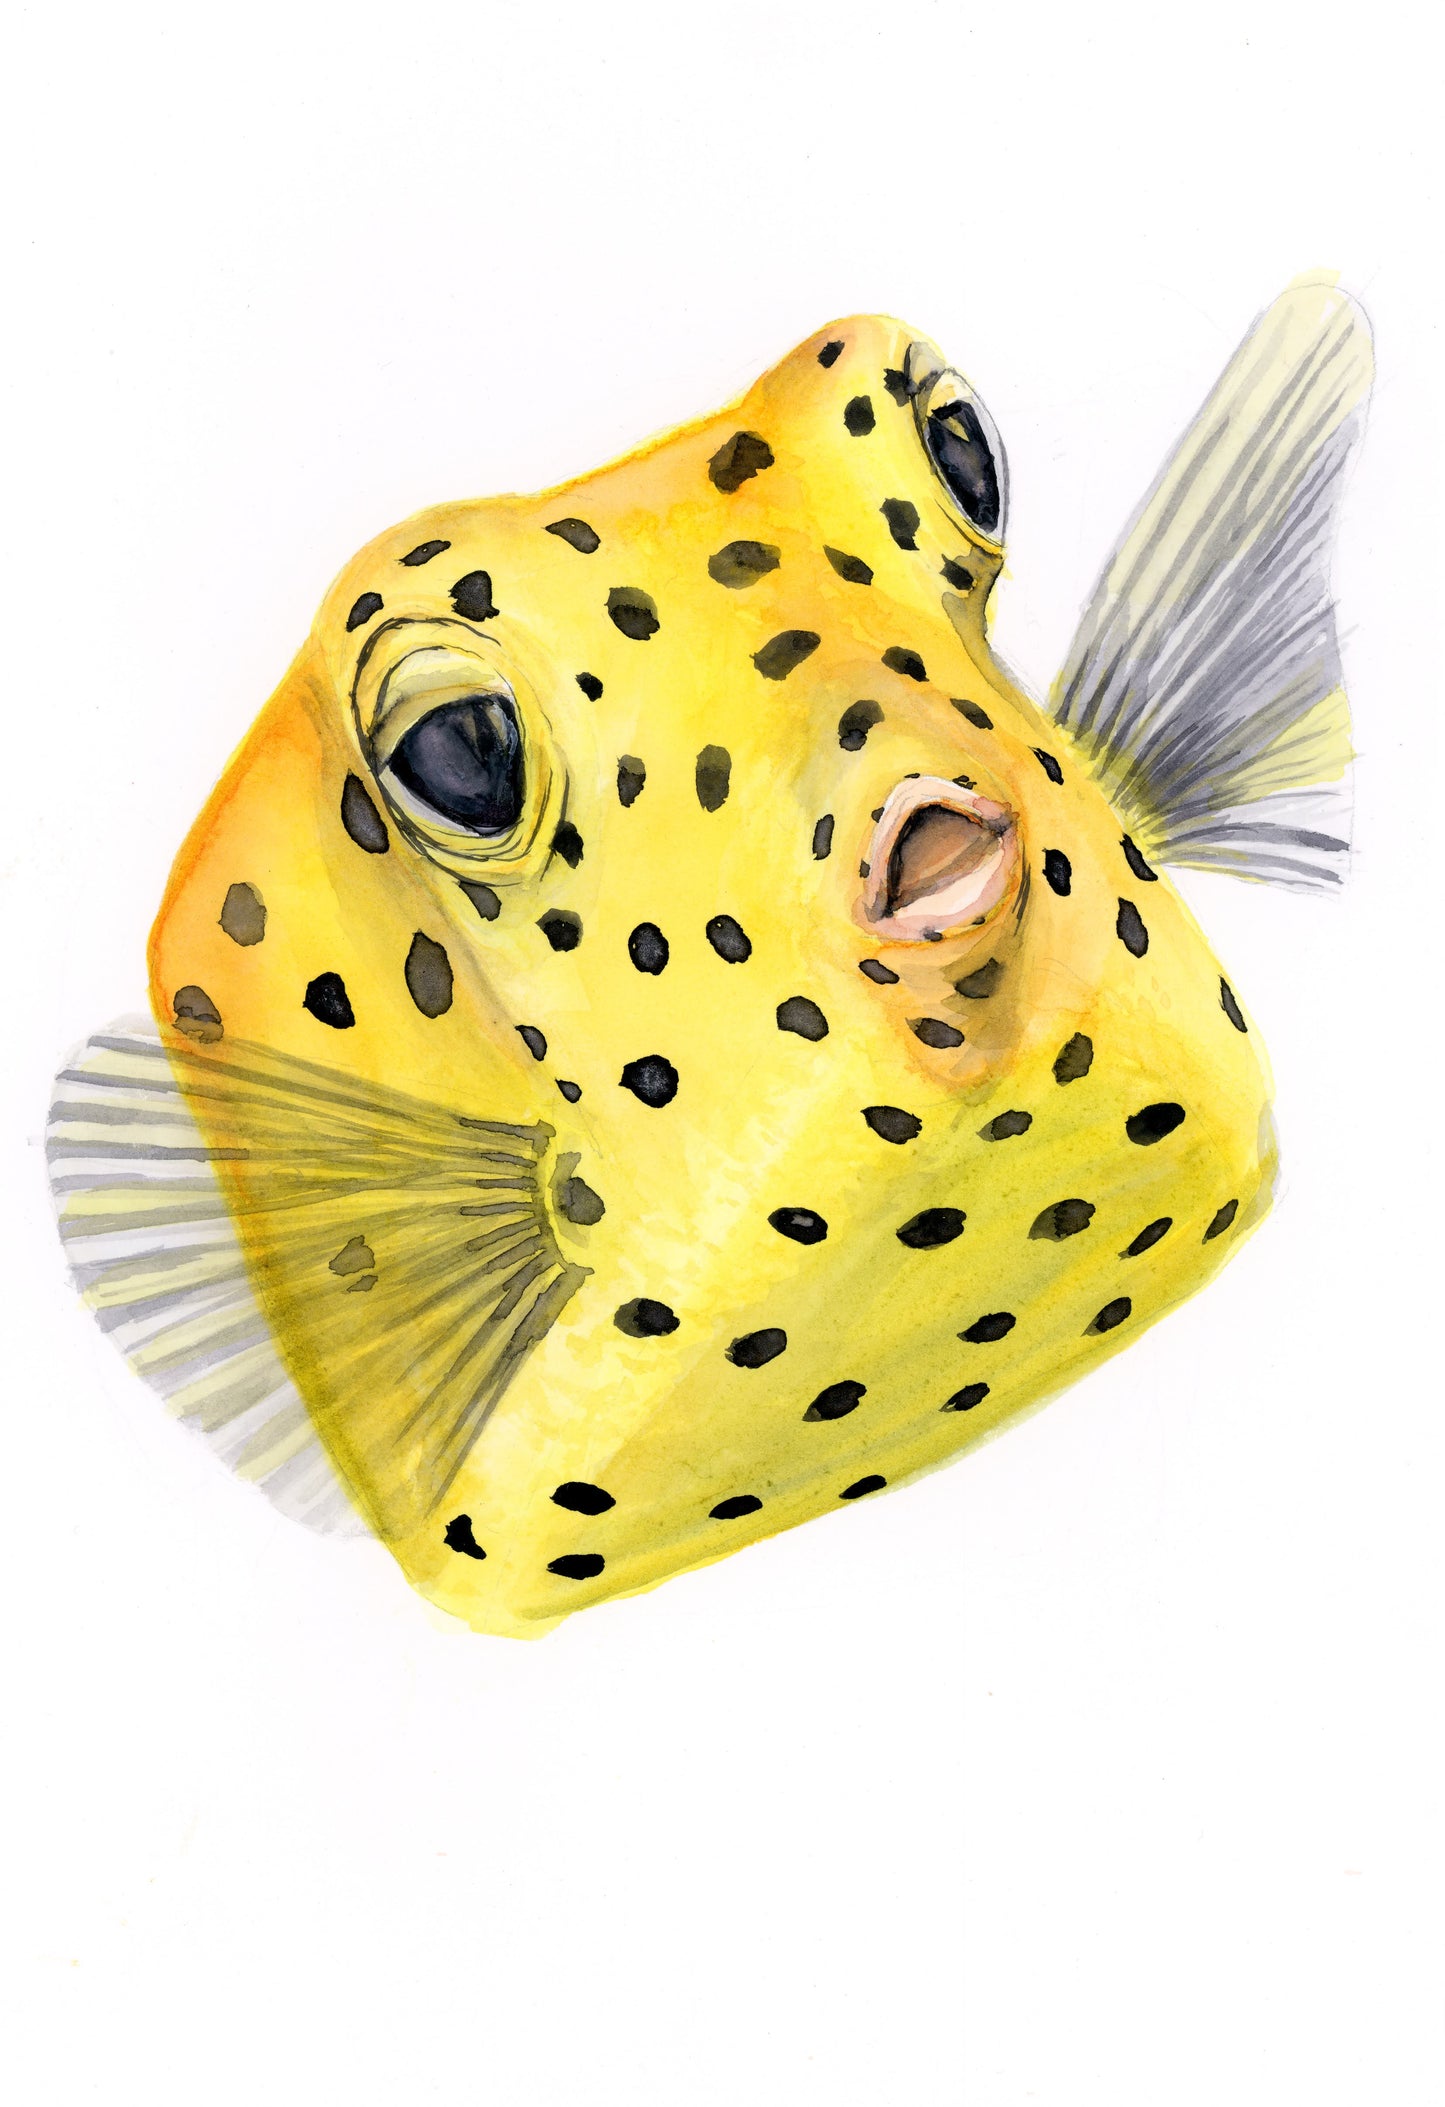 ORIGINAL PAINTING Yellow Boxfish in watercolor 7"x10"(18x25cm)